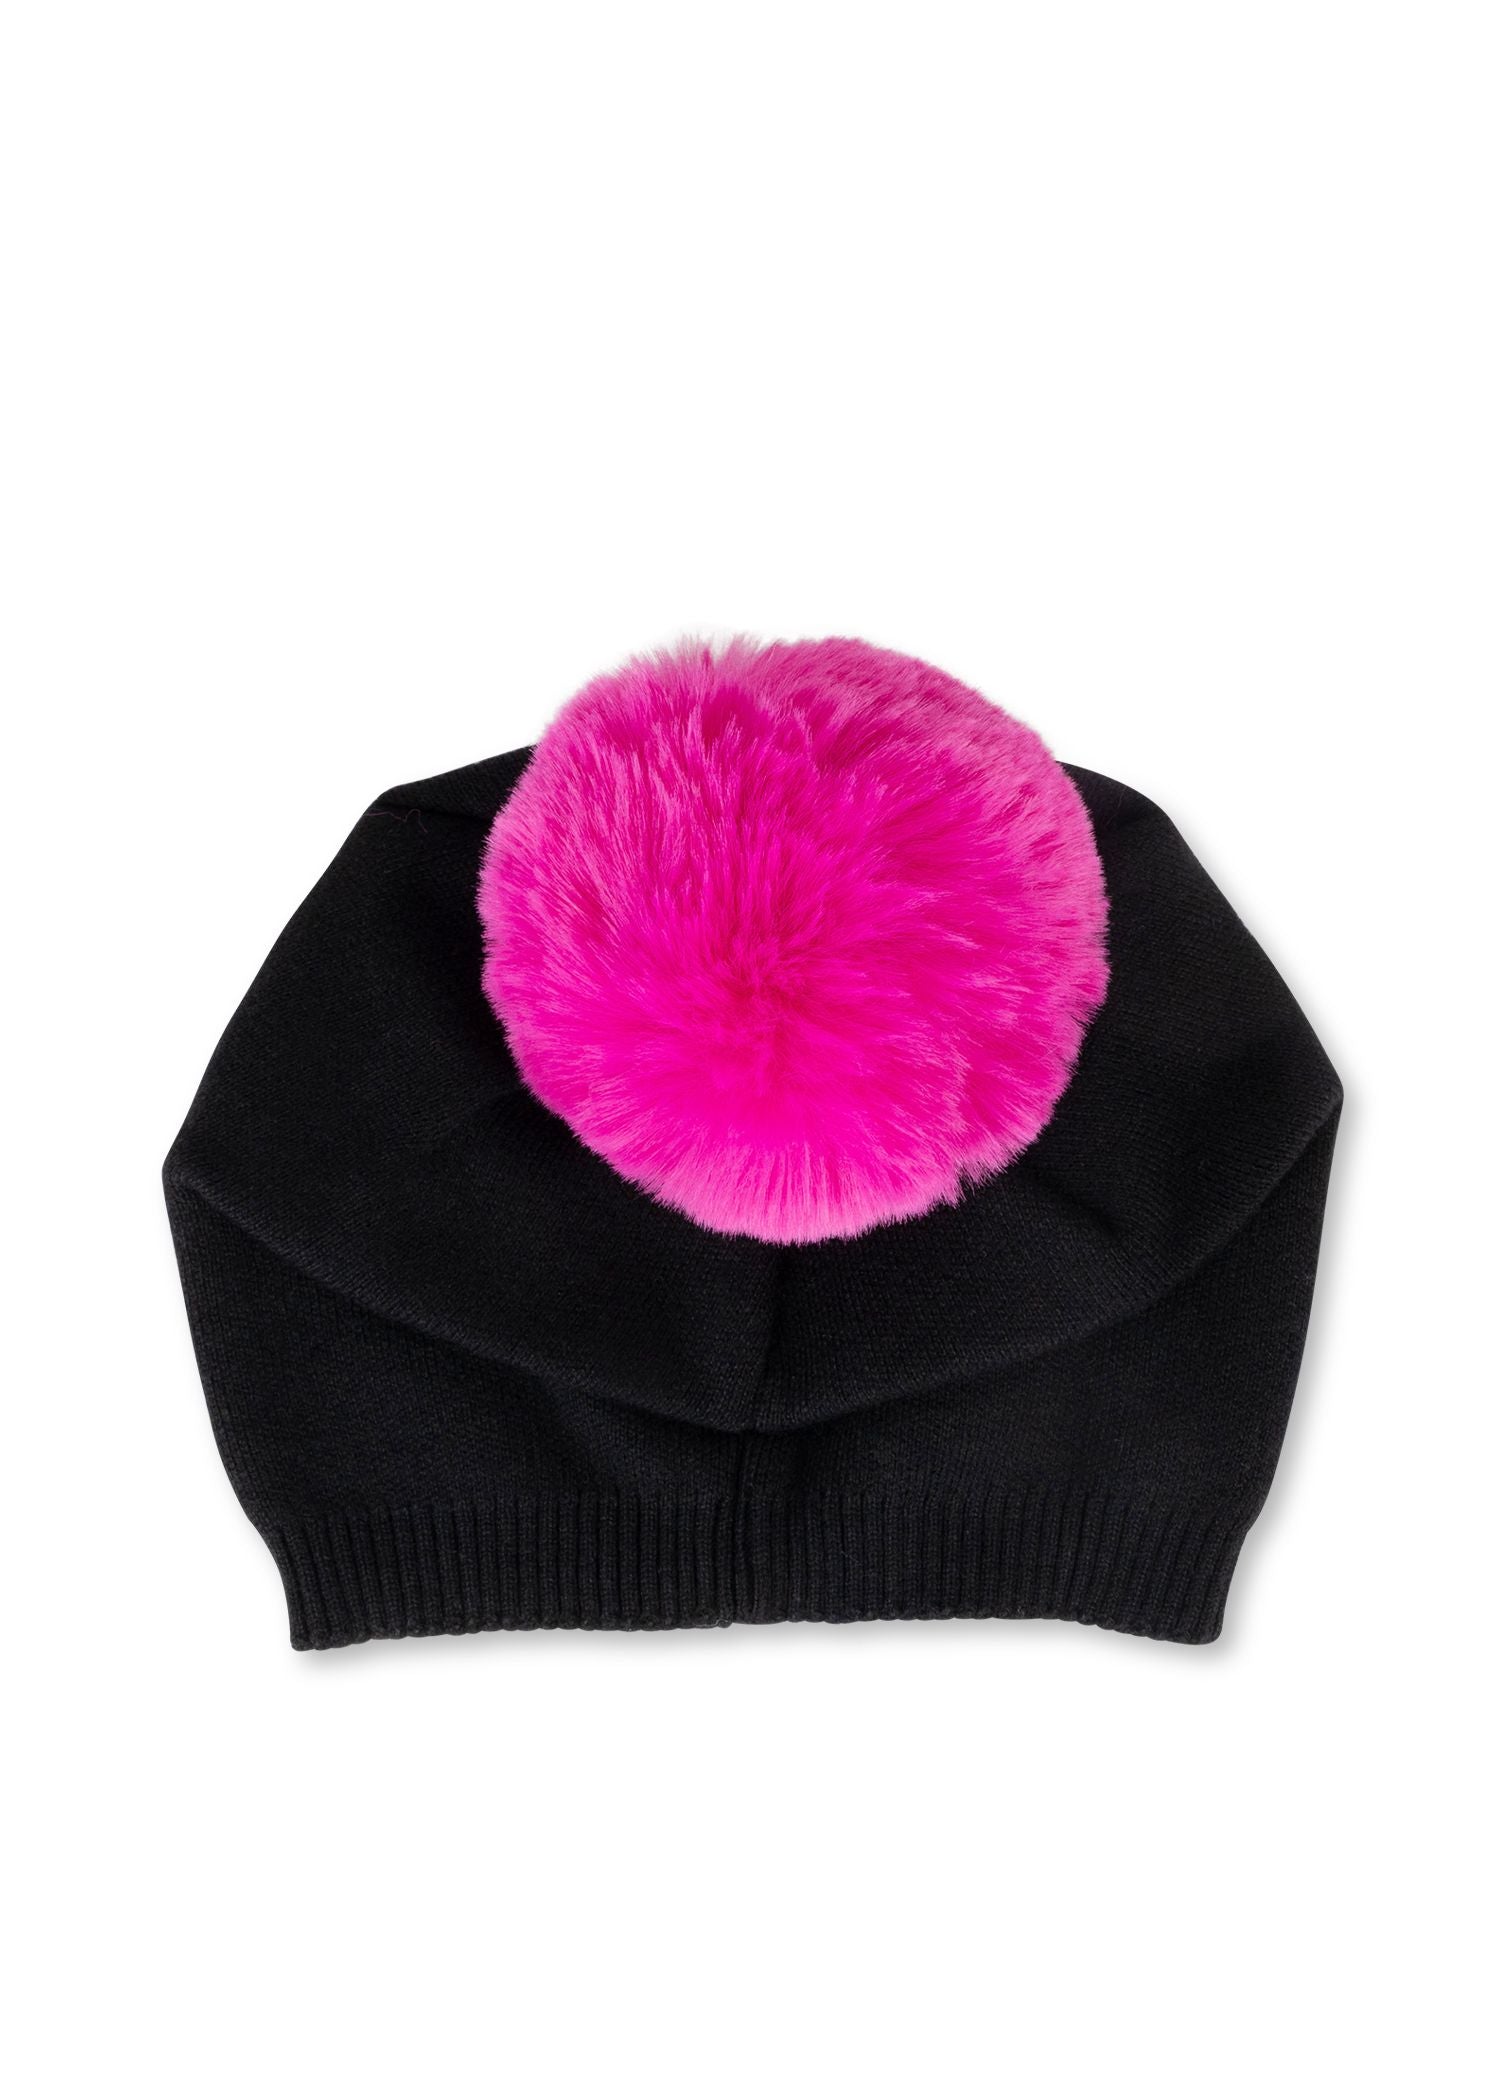 brooklyn beanie black/hot pink faux fur pom